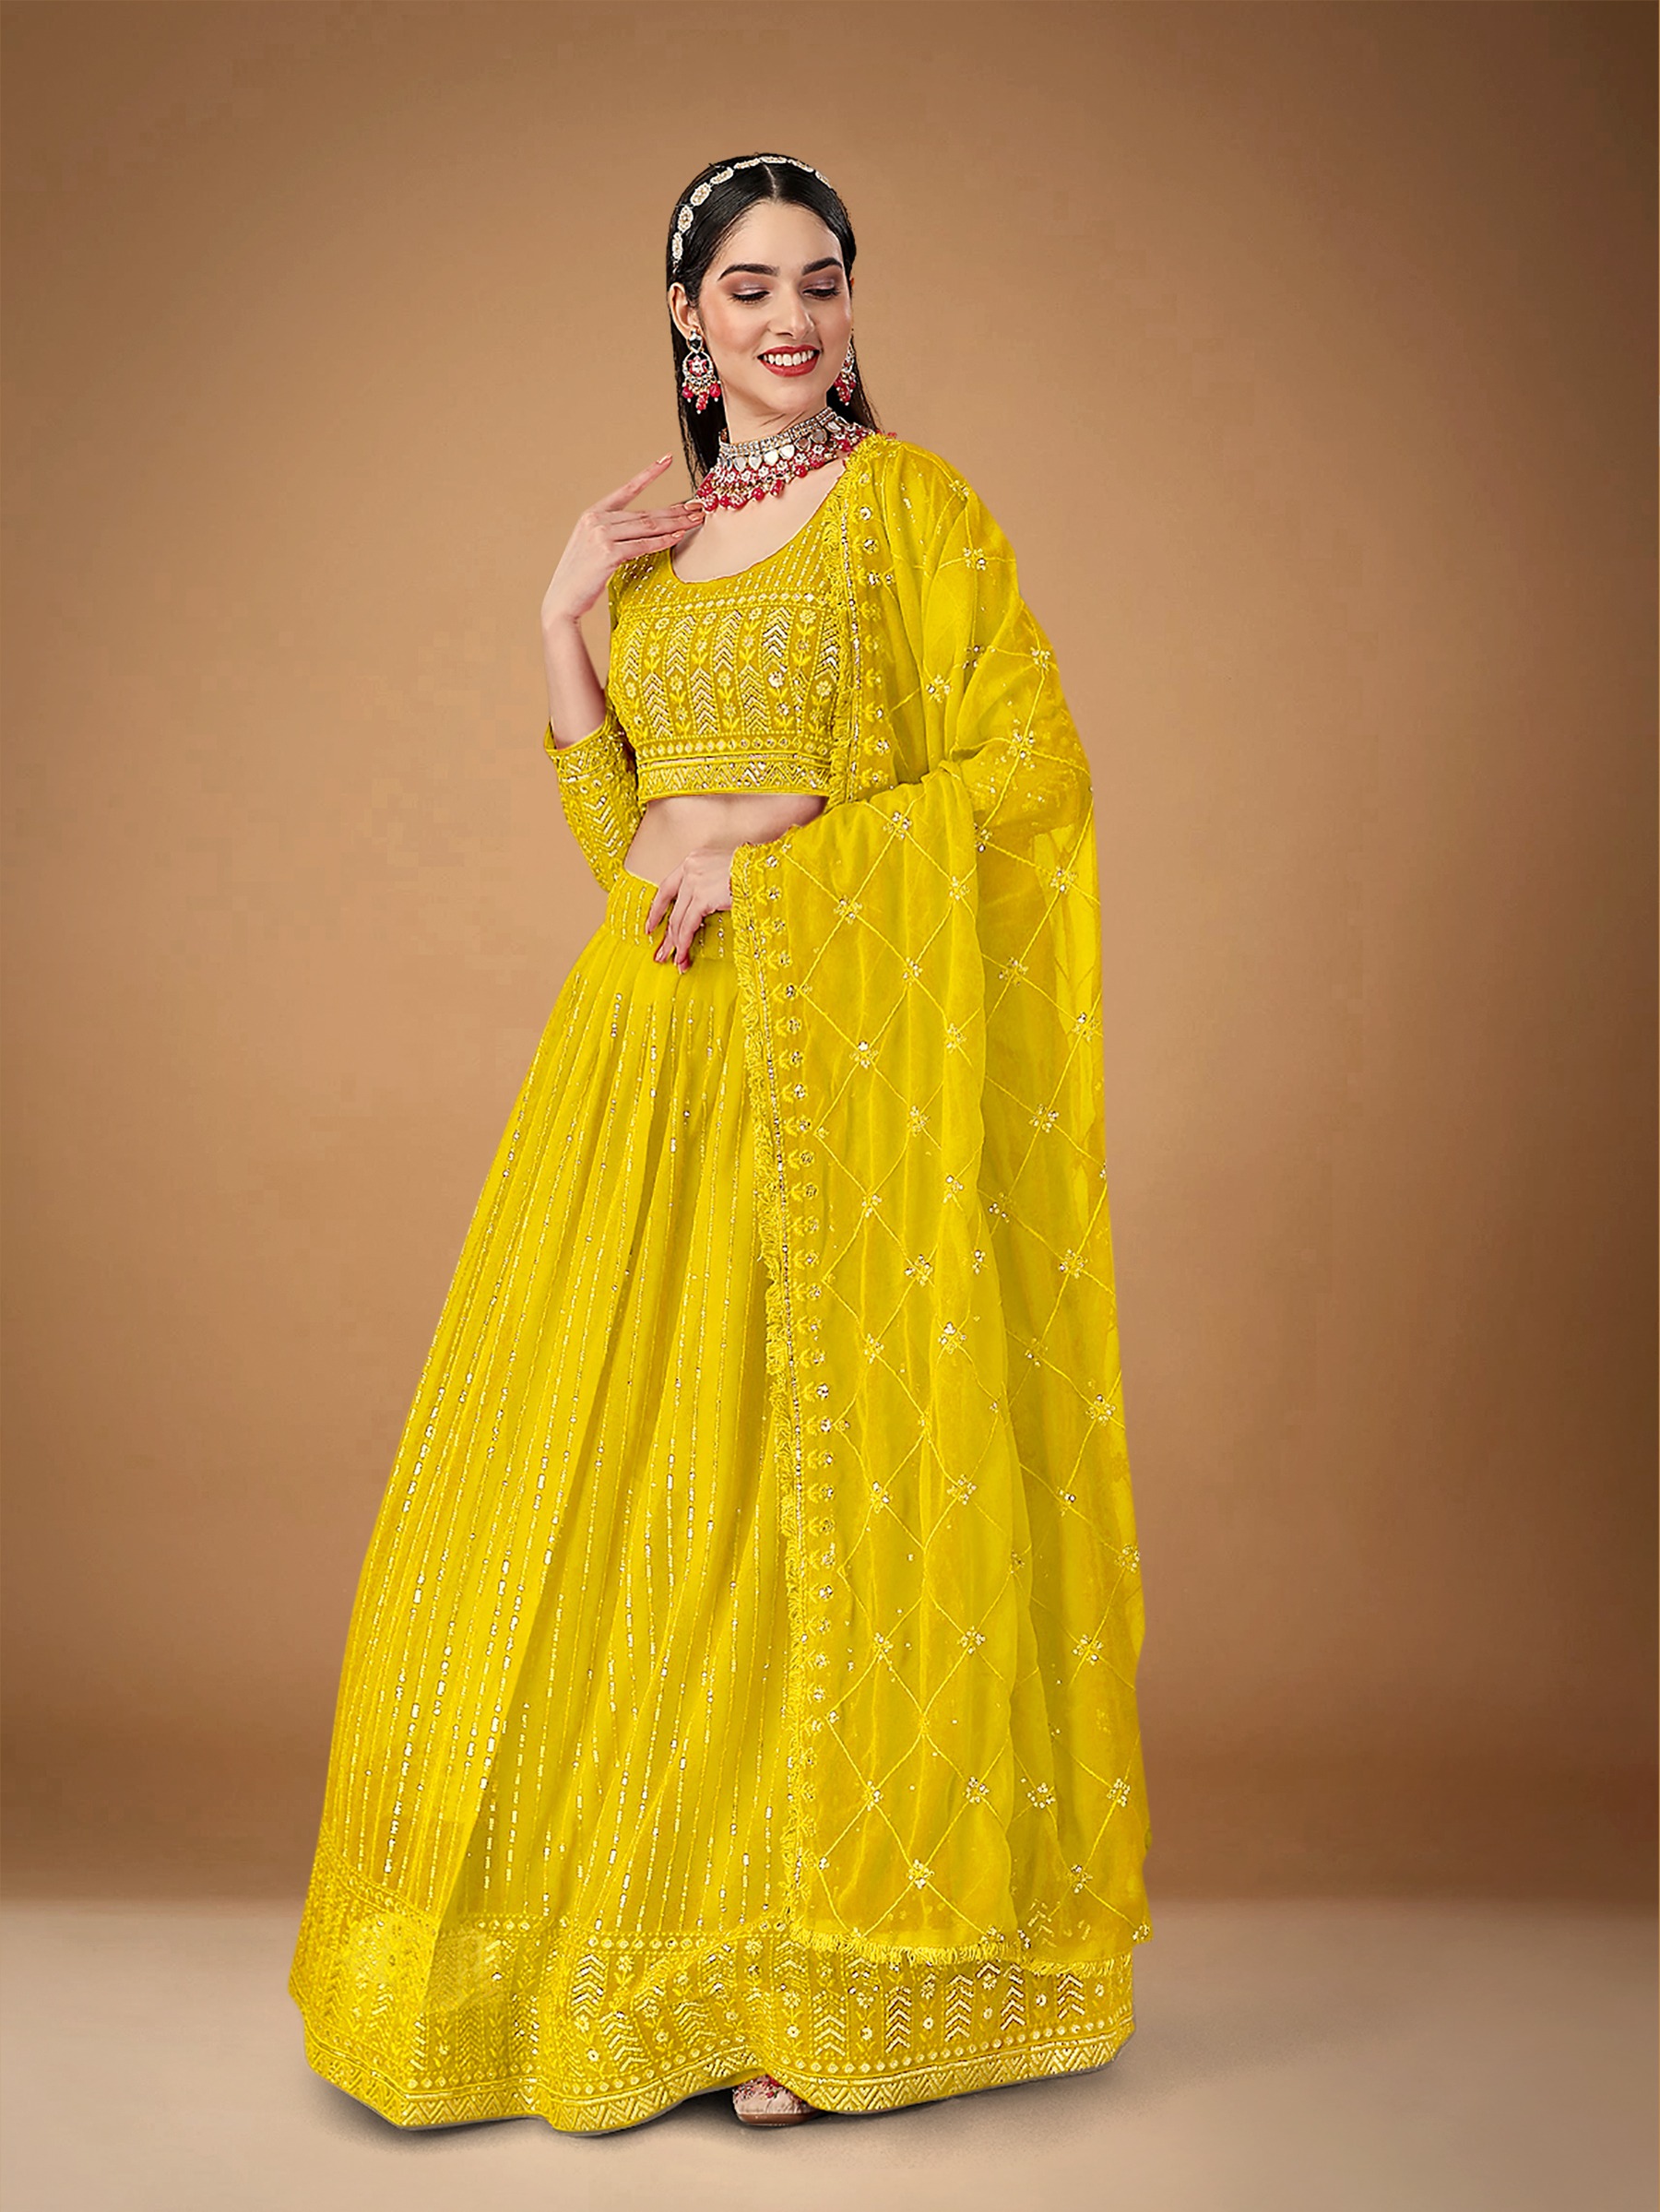 Embroidered Yellow Lehenaga For Weddings | Latest Kurti Designs